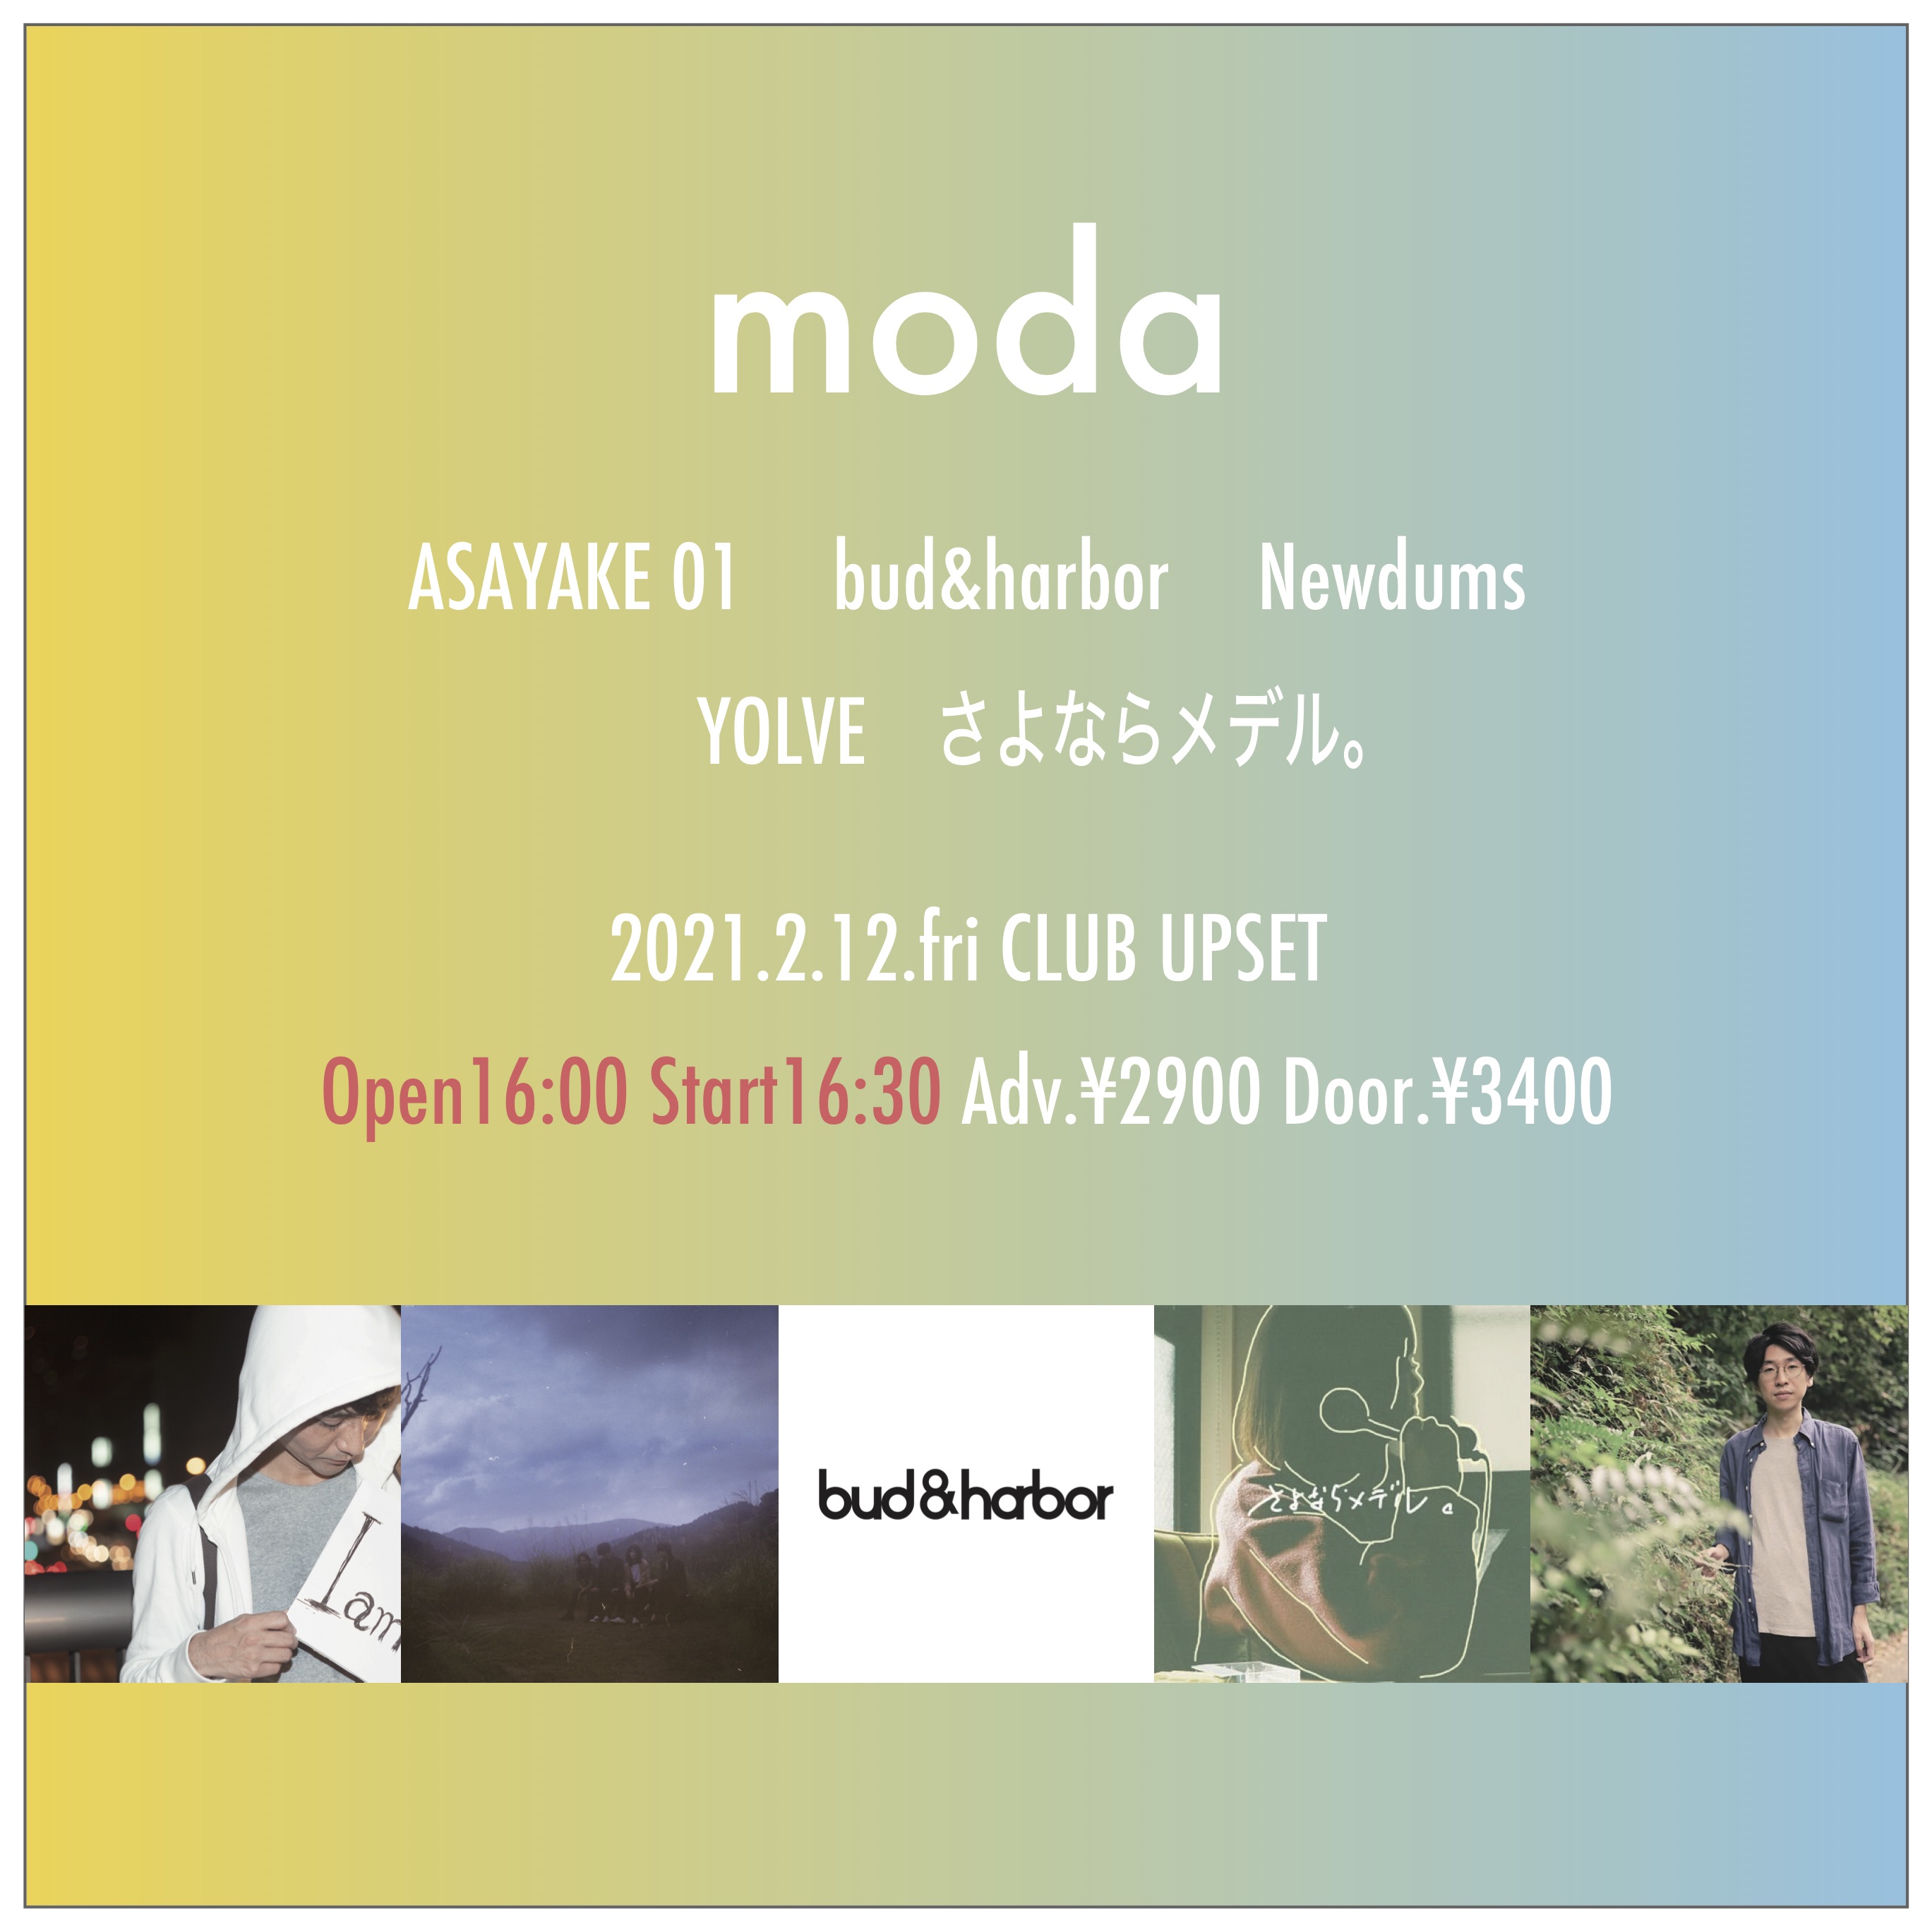 【CLUB UPSET】2021/2/12(金) moda ライブチケット